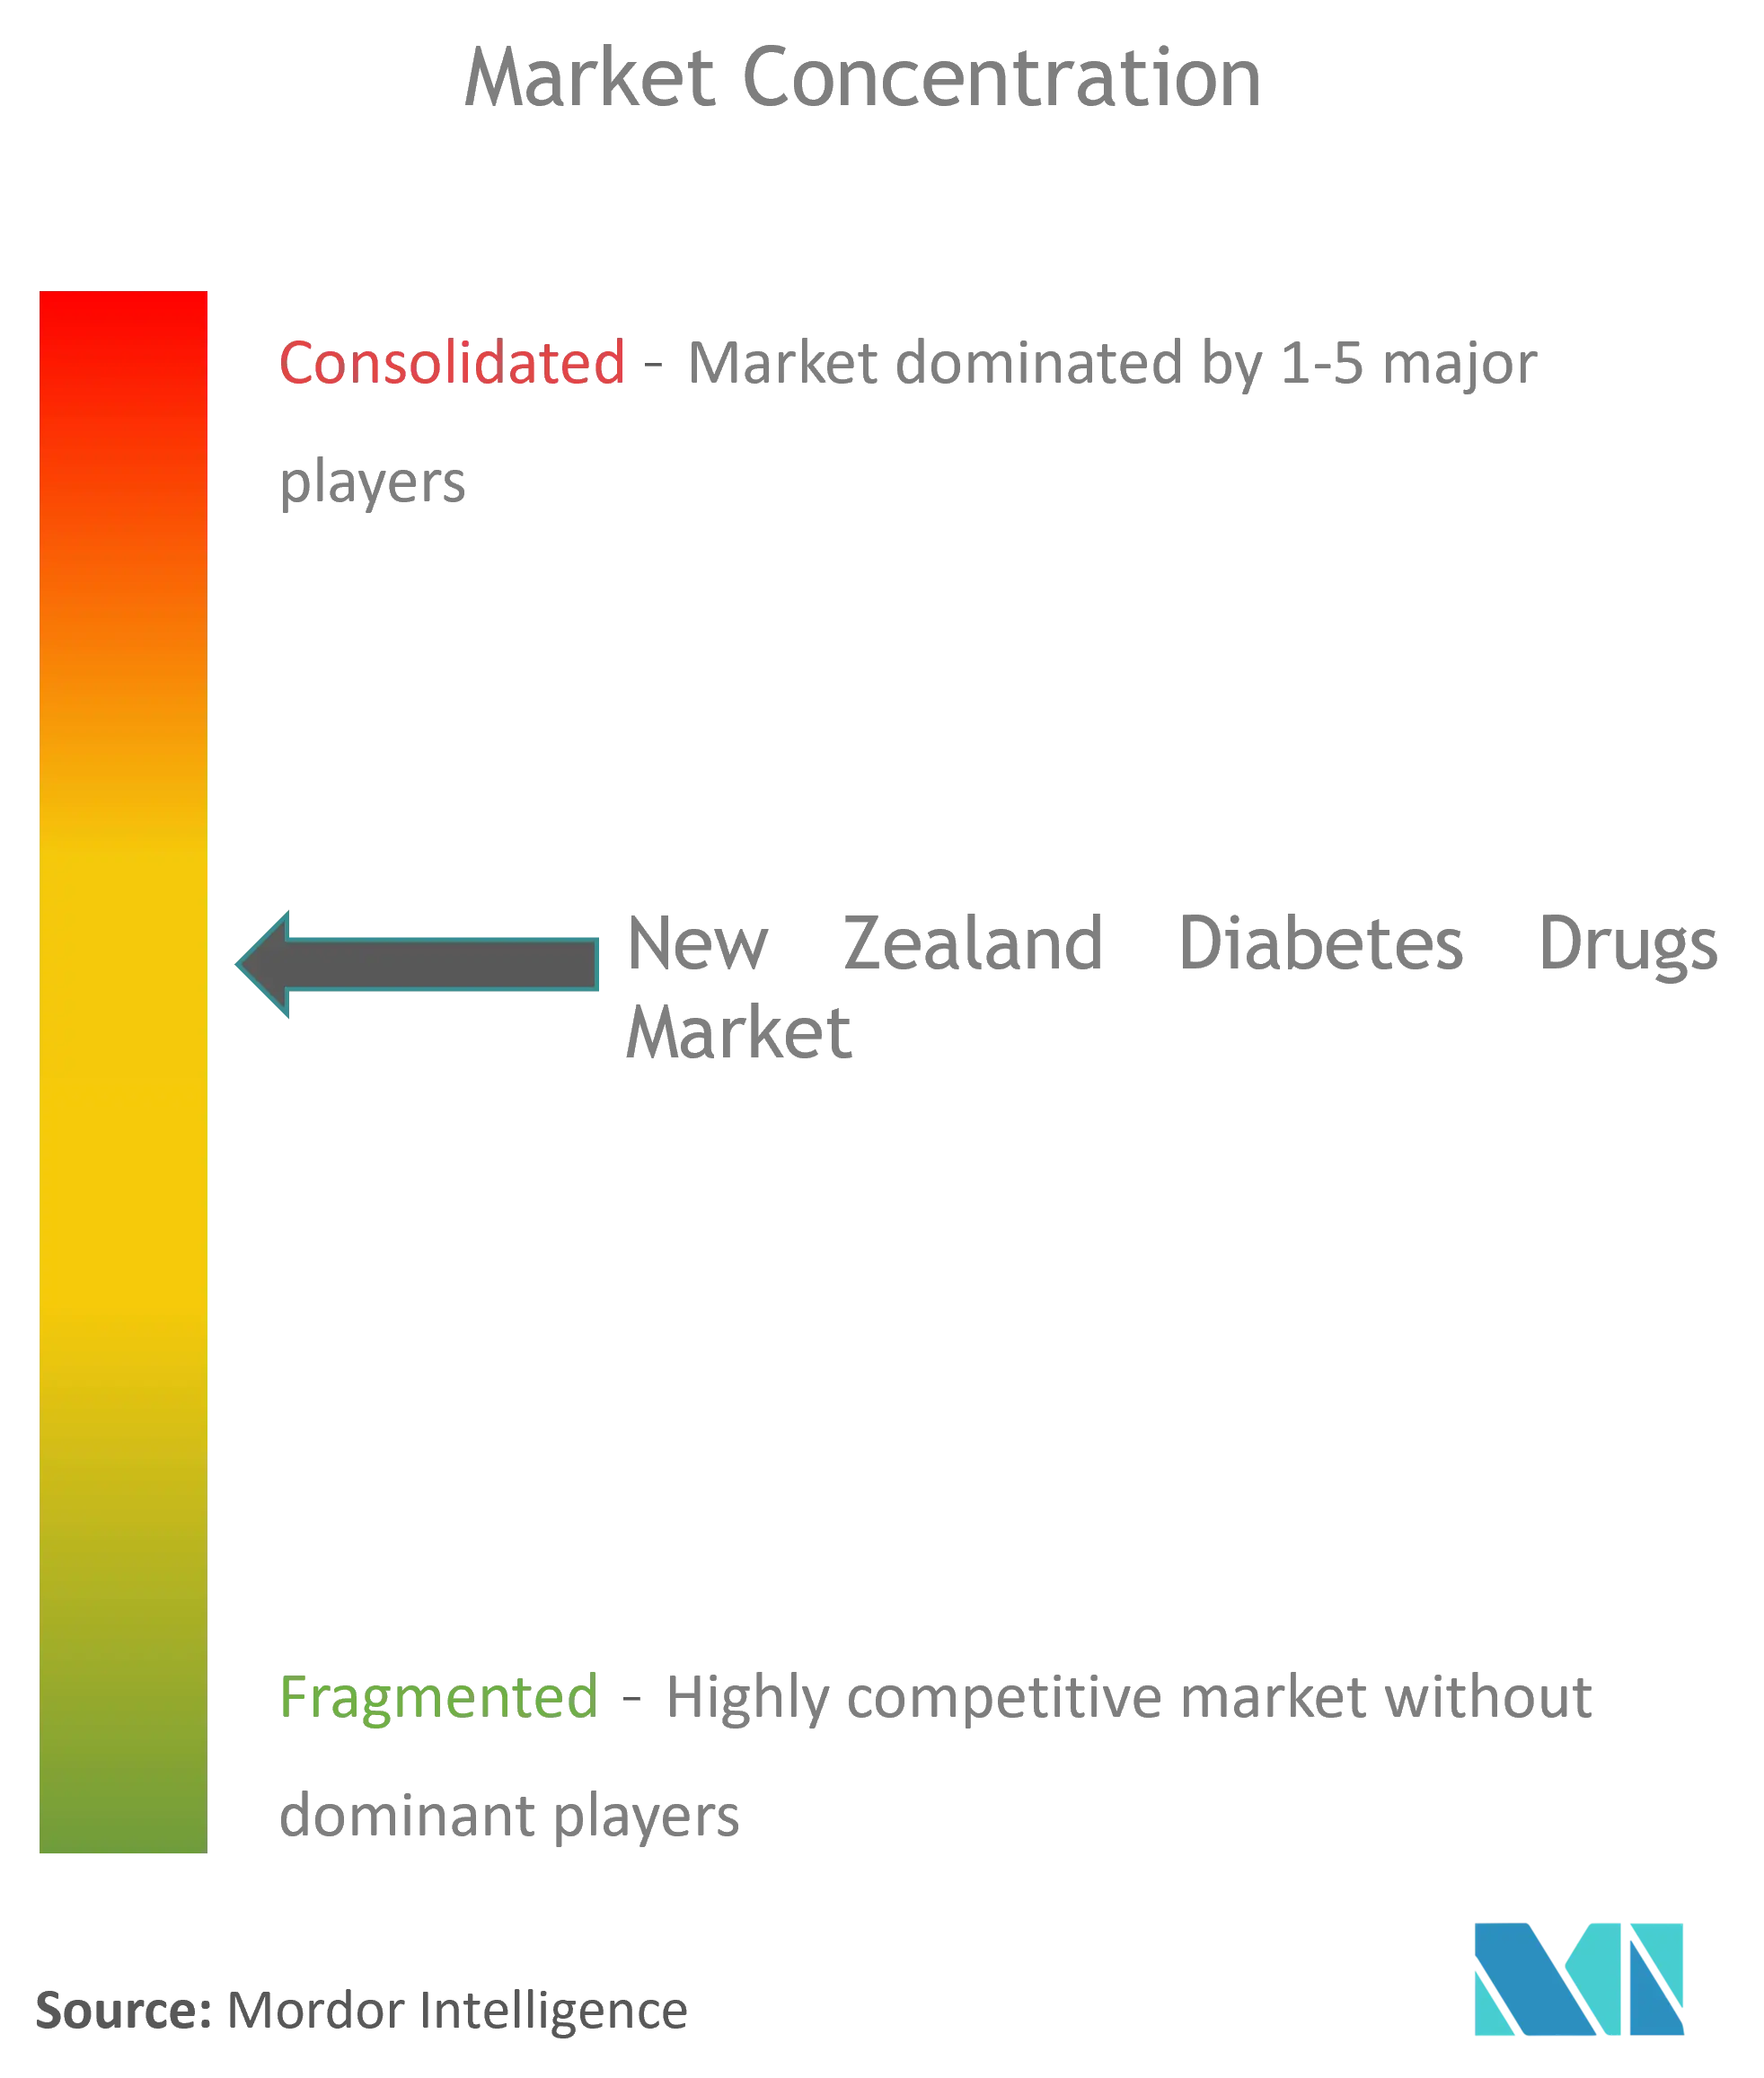 New Zealand Diabetes Drugs Market Concentration